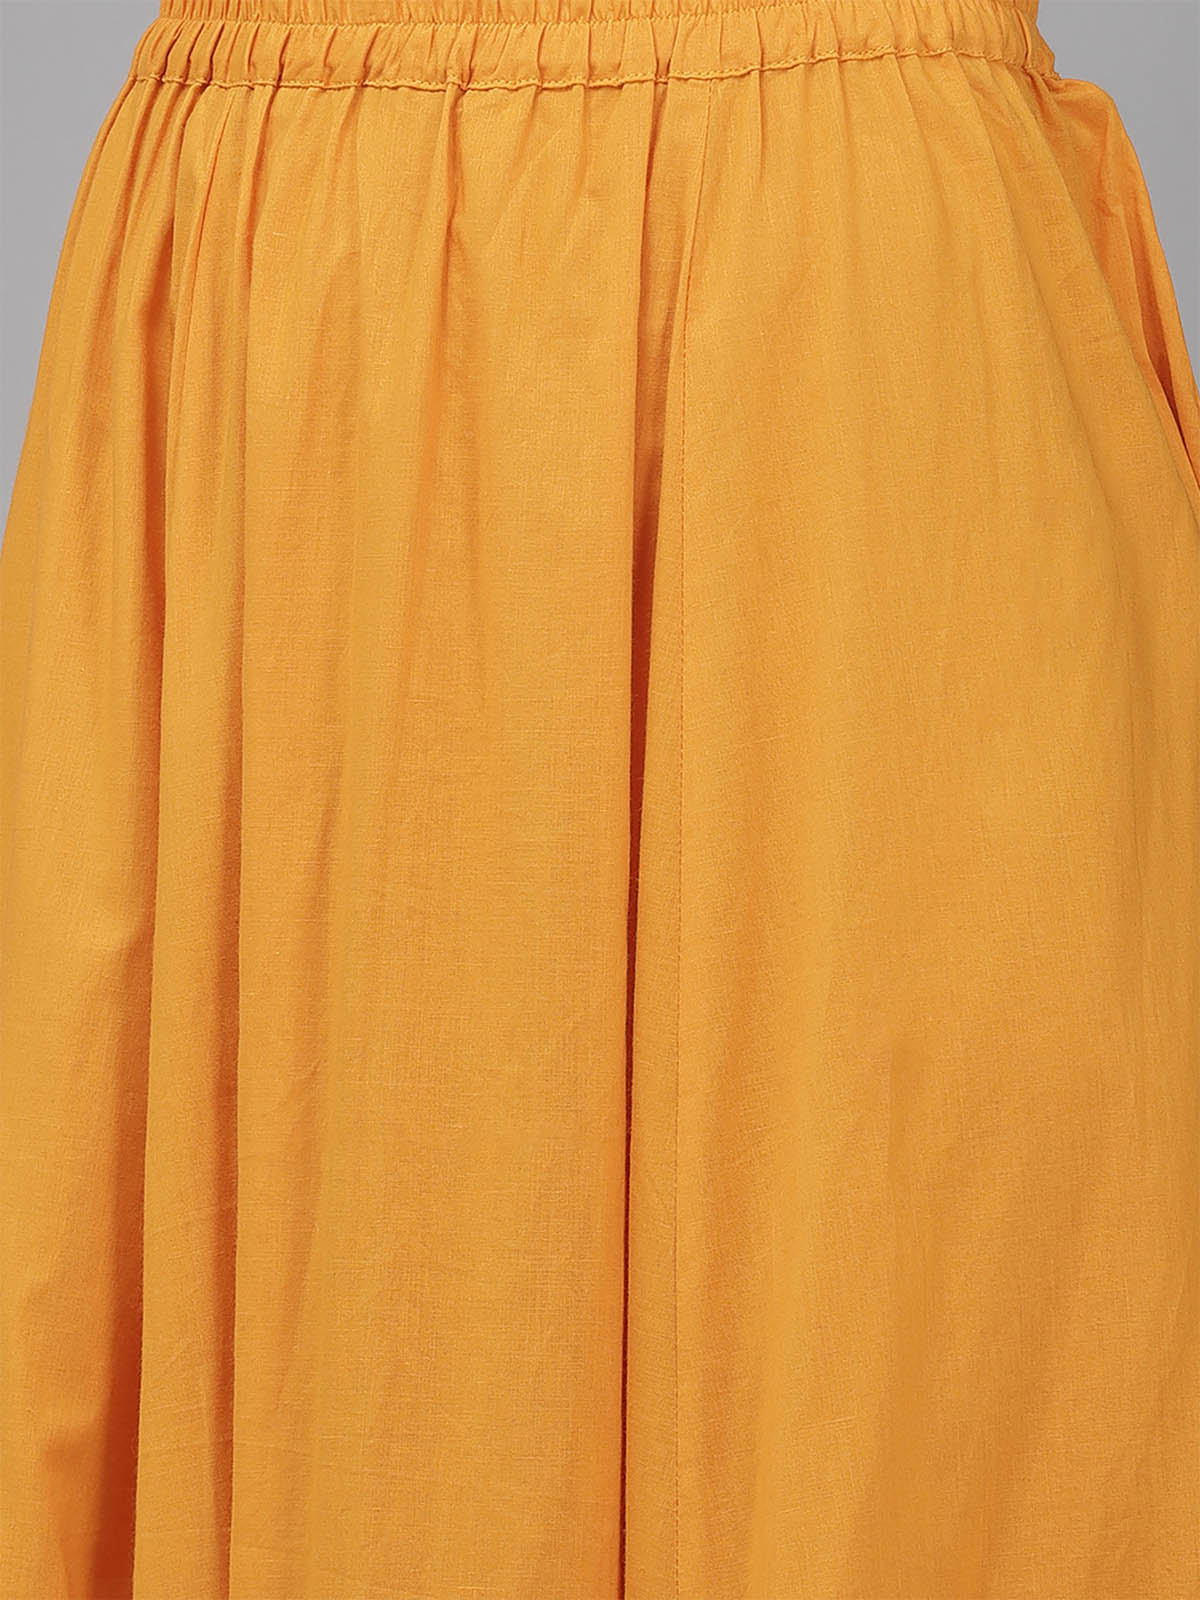 Women's Orange Printed Straight Kurta Palazzo Set - Odette